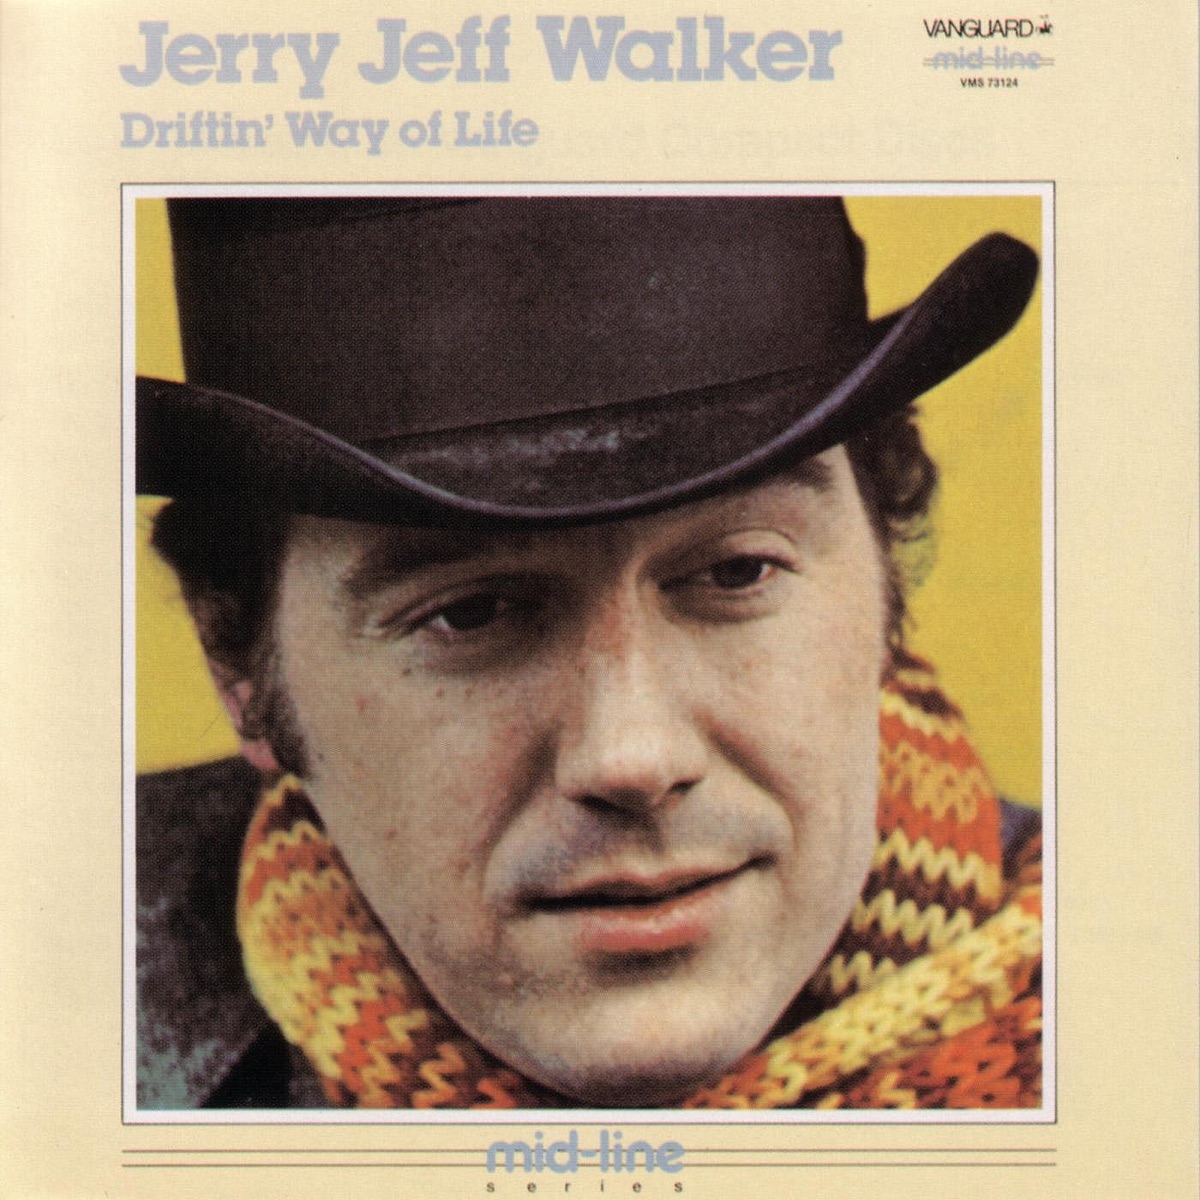 priester Missionaris Cumulatief Lone Wolf:The Best of Jerry Jeff Walker (Elektra Sessions) - Album by Jerry  Jeff Walker - Apple Music